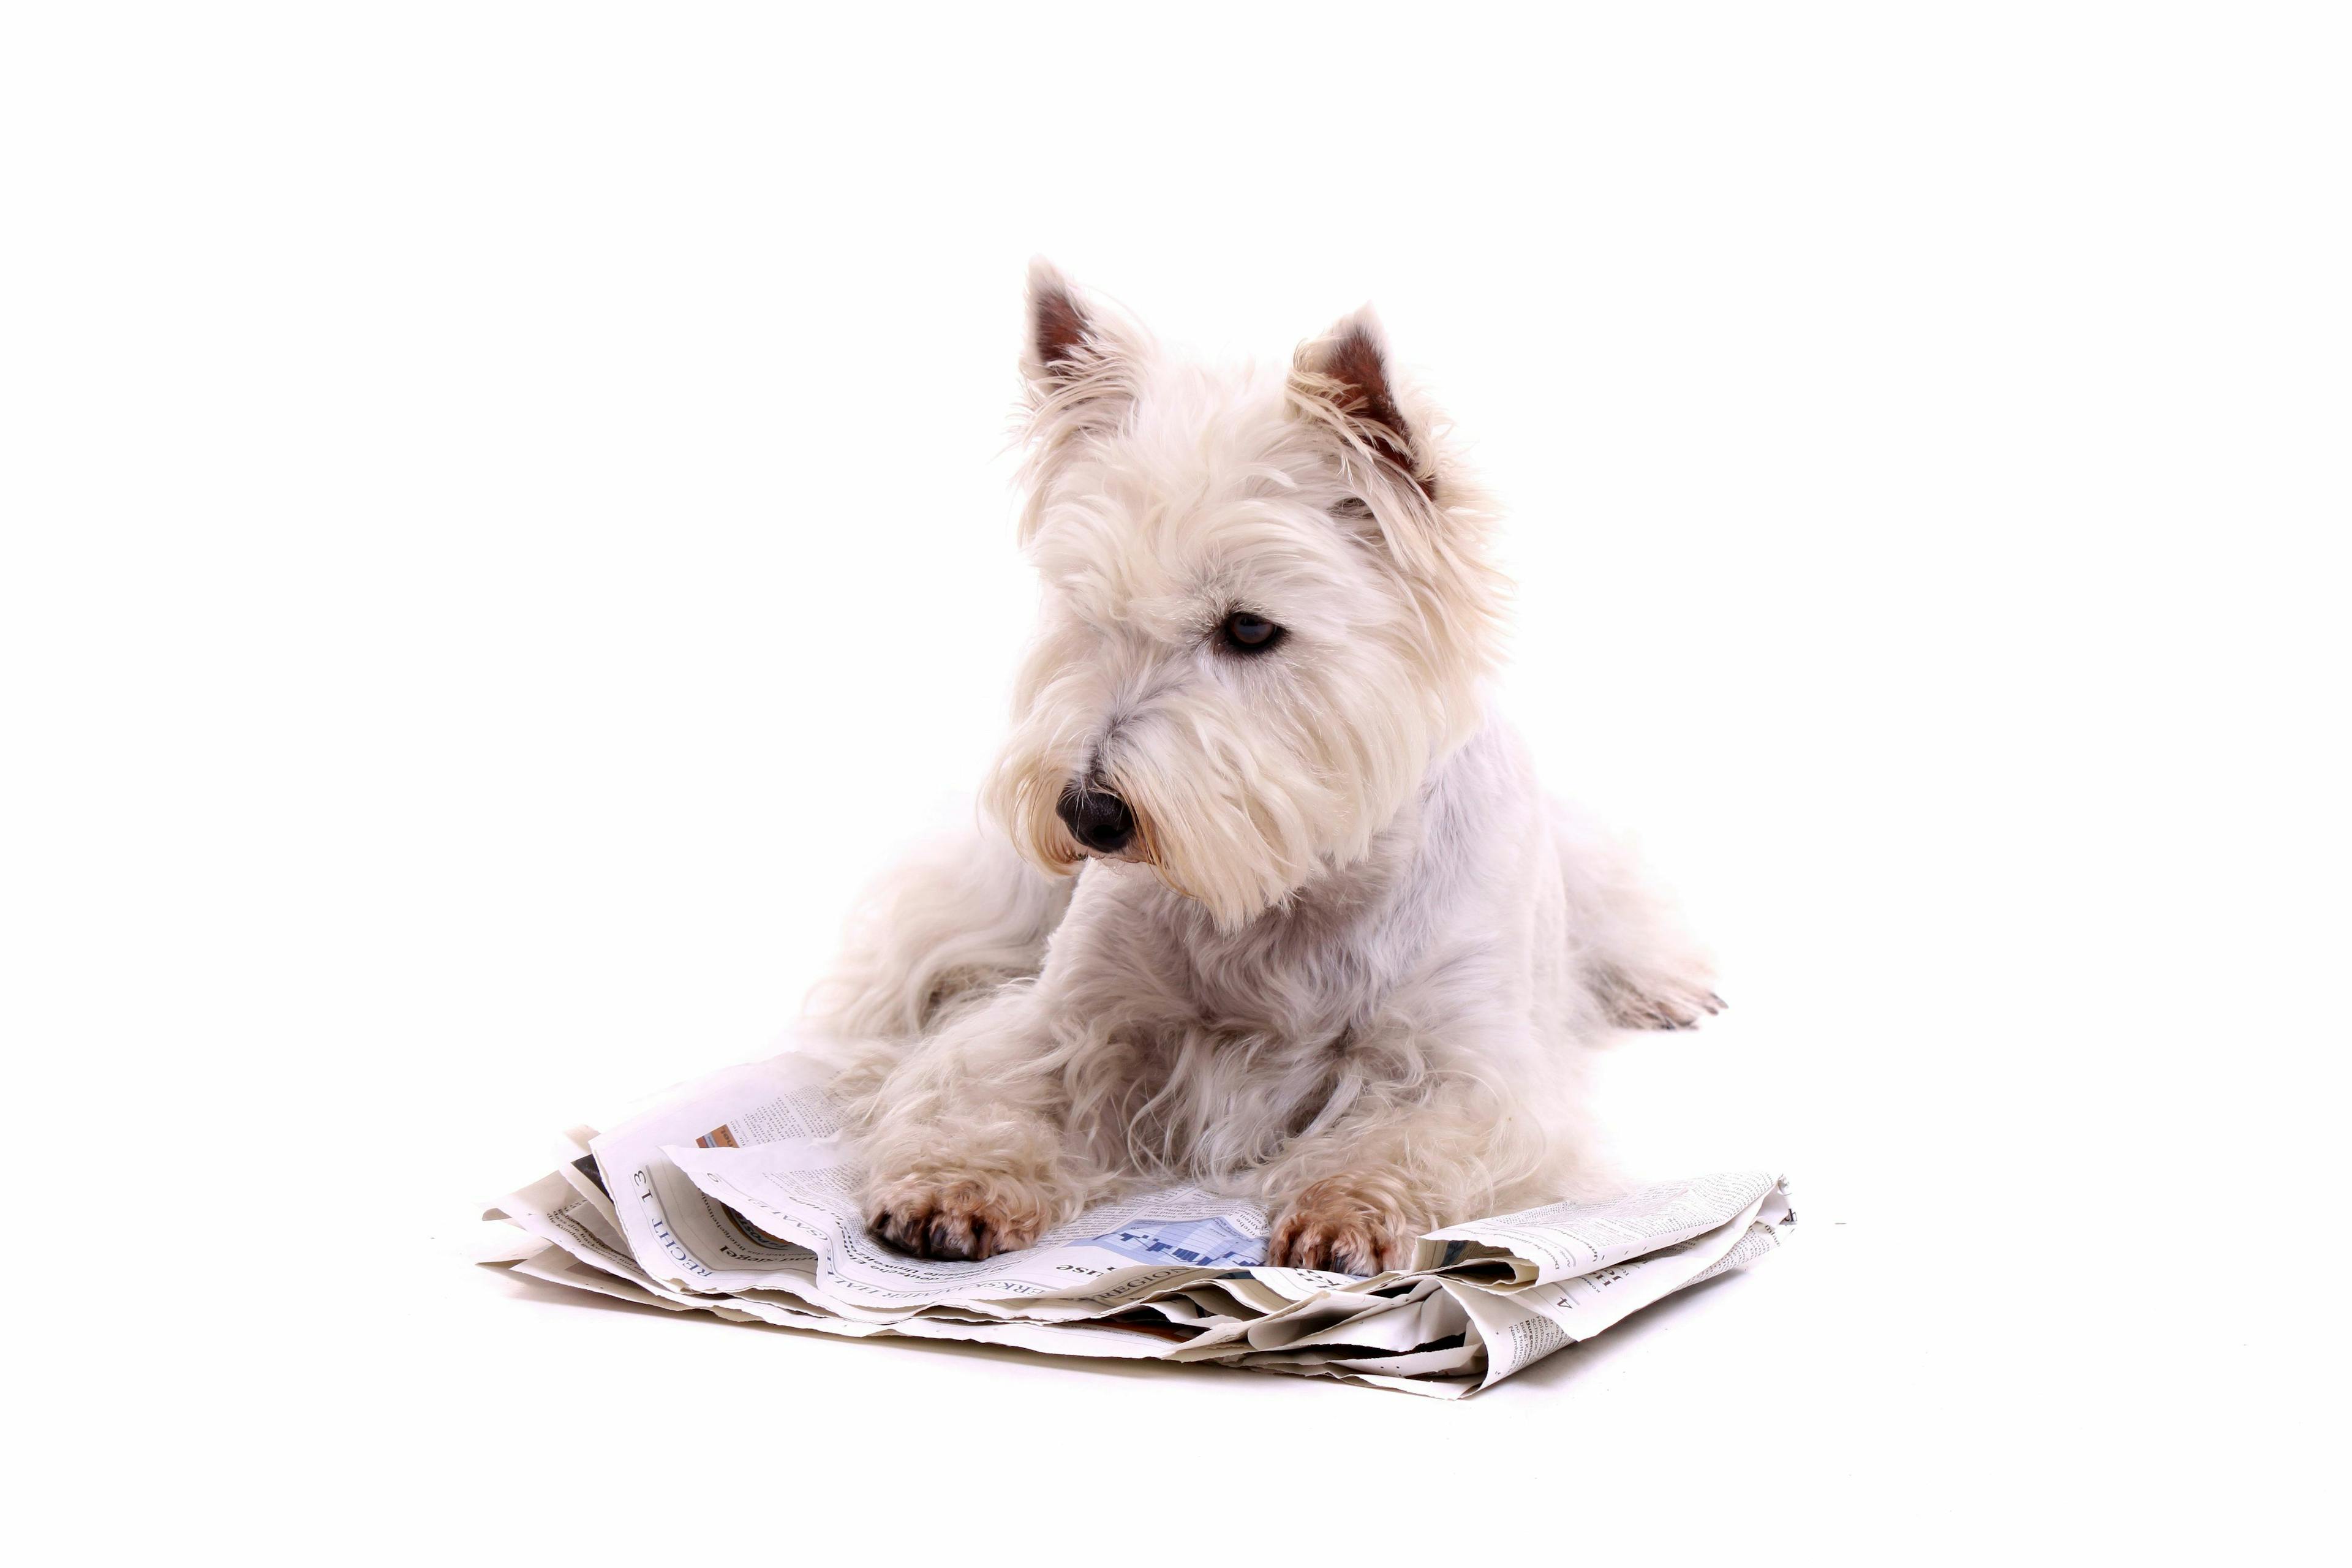 Dog sitting on newspaper